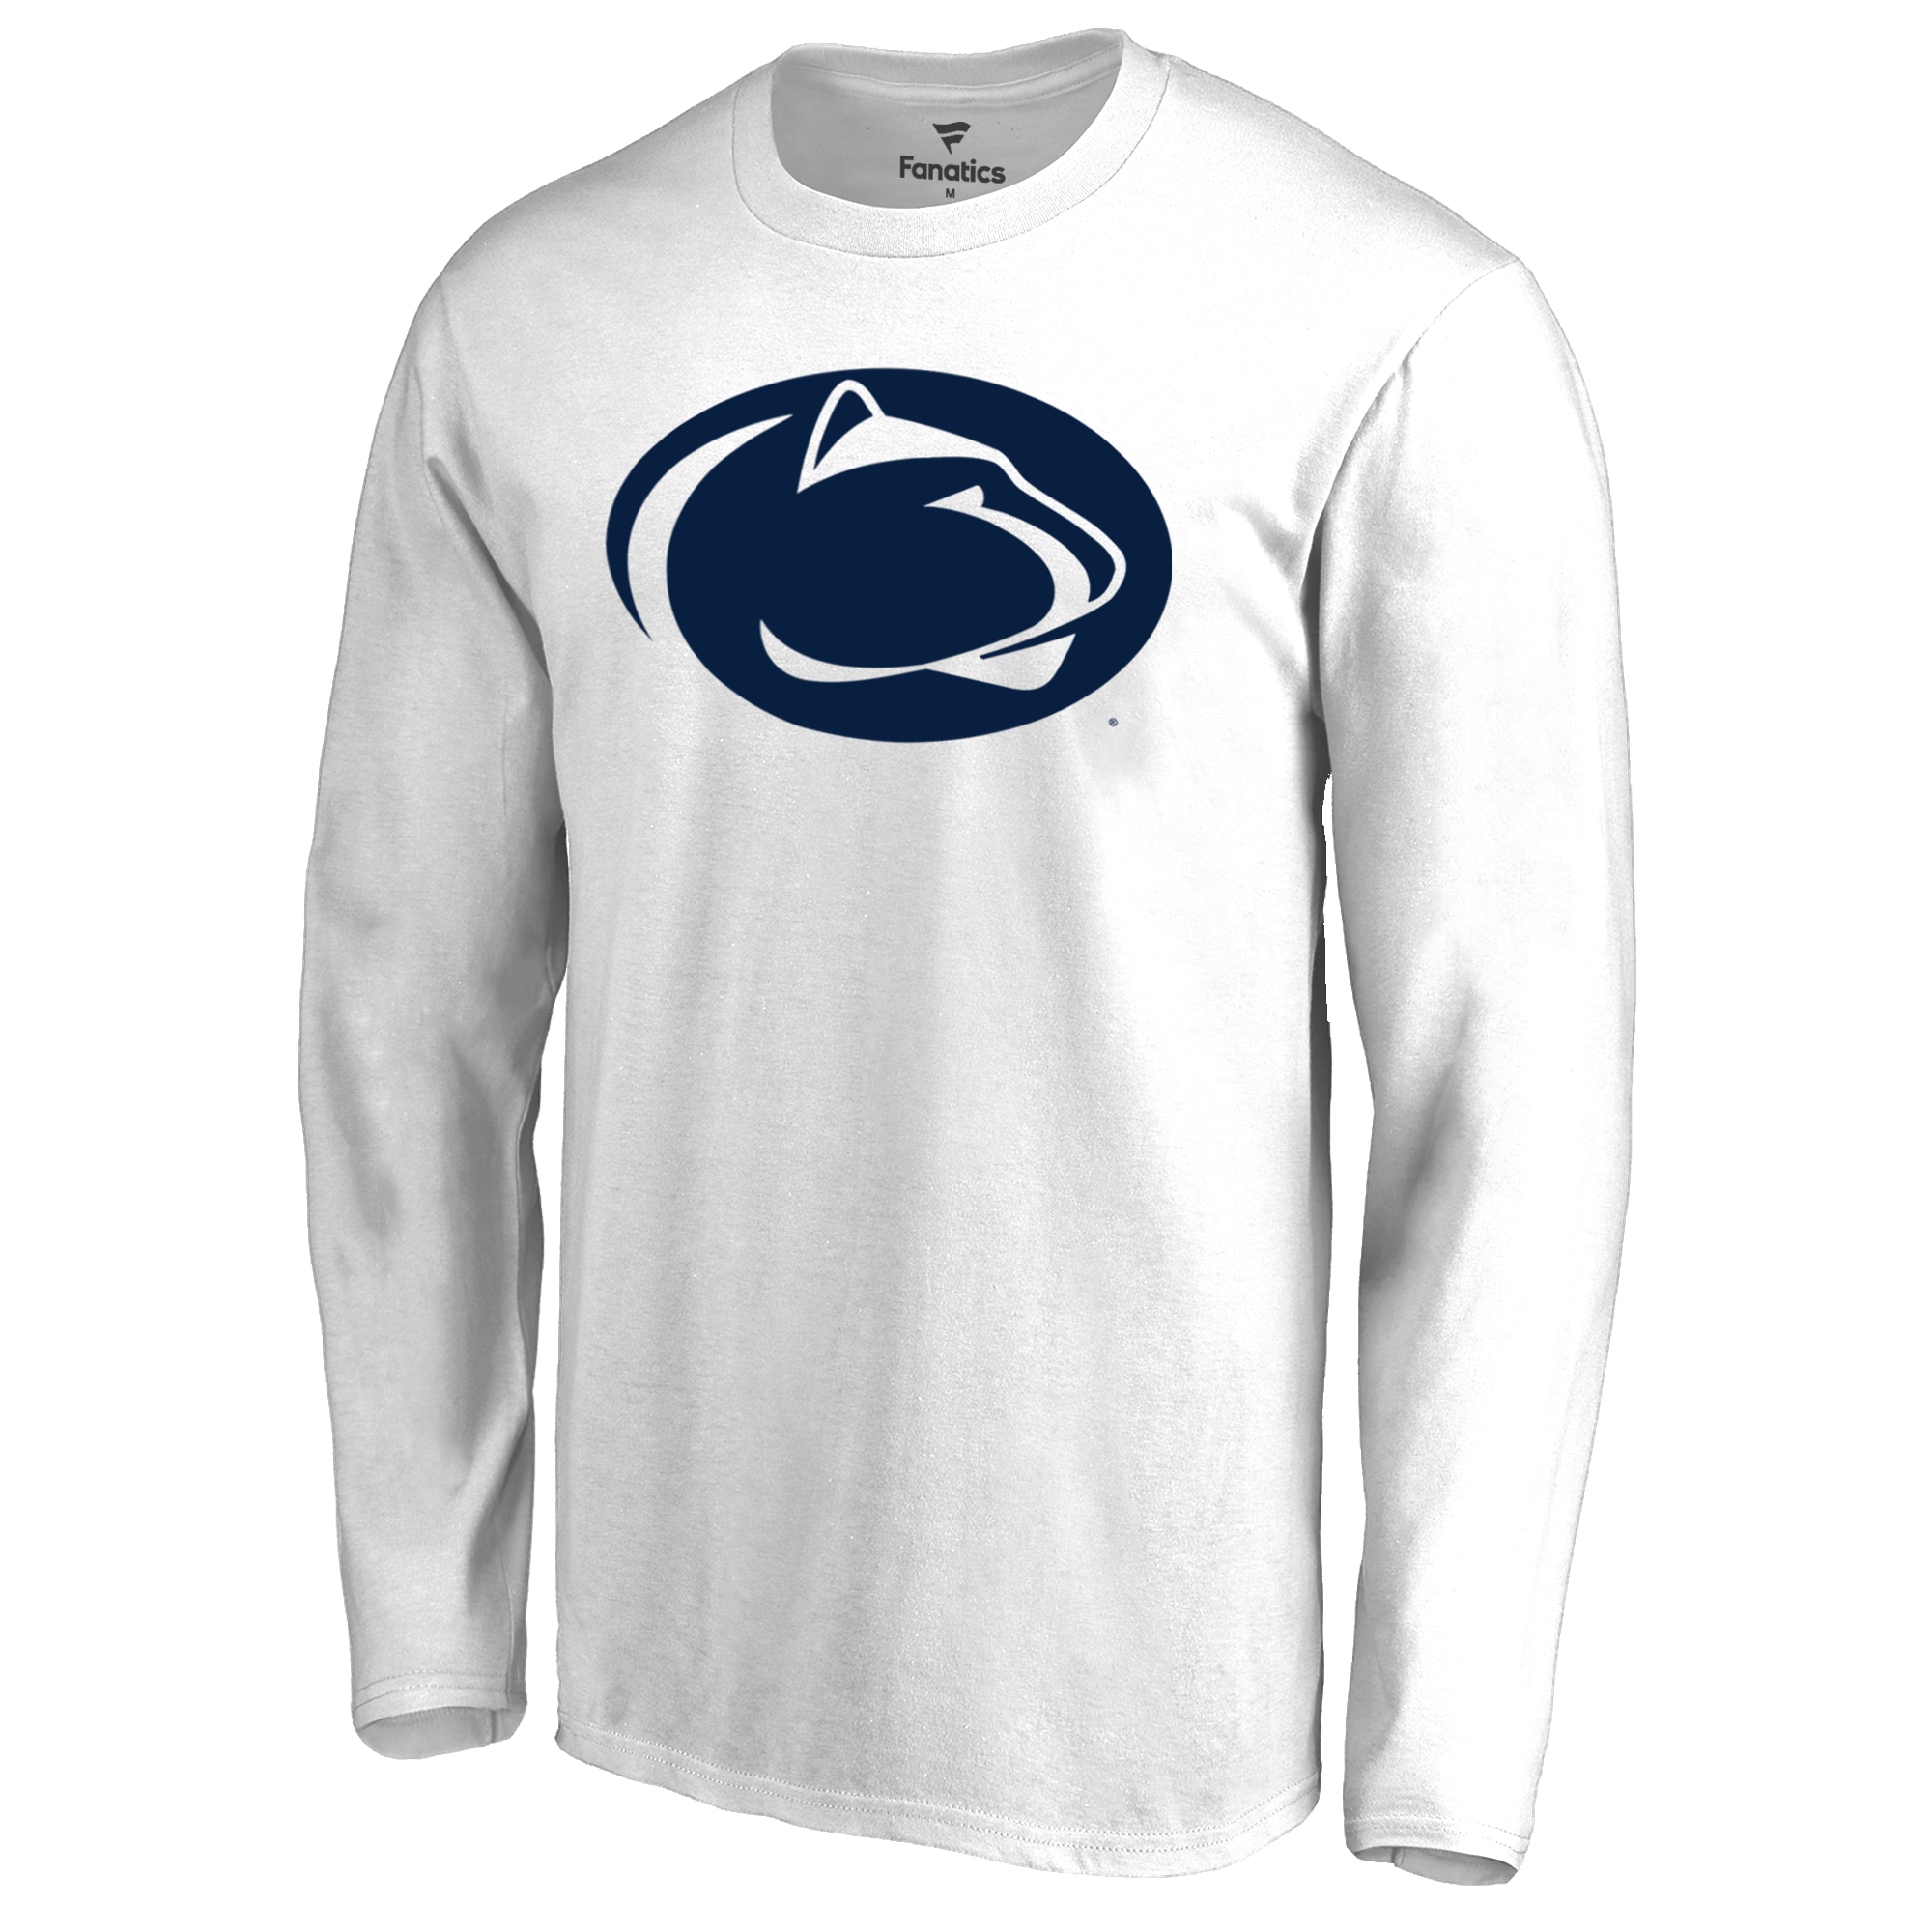 Men's Fanatics Branded White Penn State Nittany Lions Primary Logo Long Sleeve T-Shirt - image 2 of 3